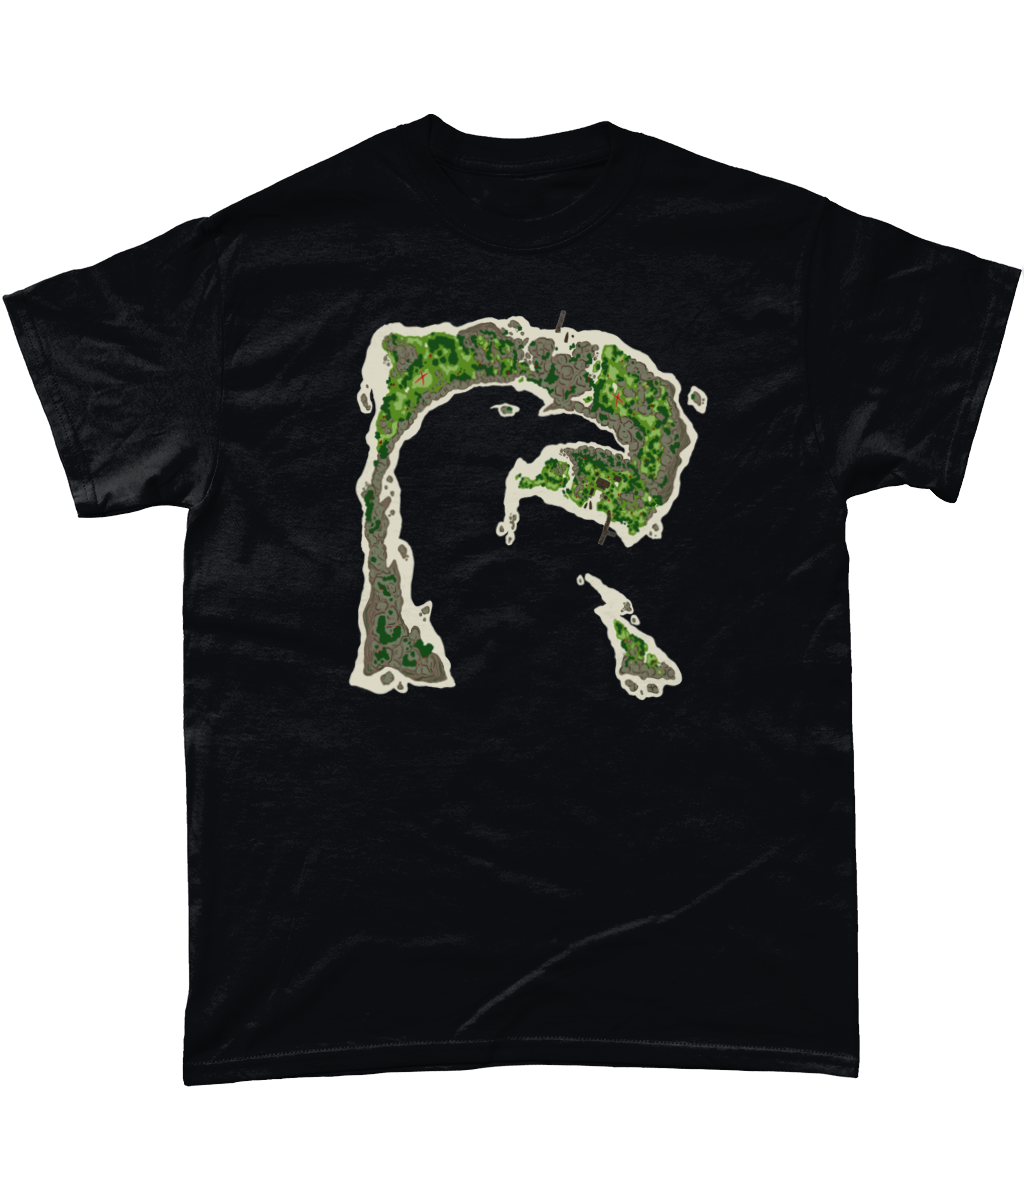 Rob Raven T-Shirt 'Raven island'